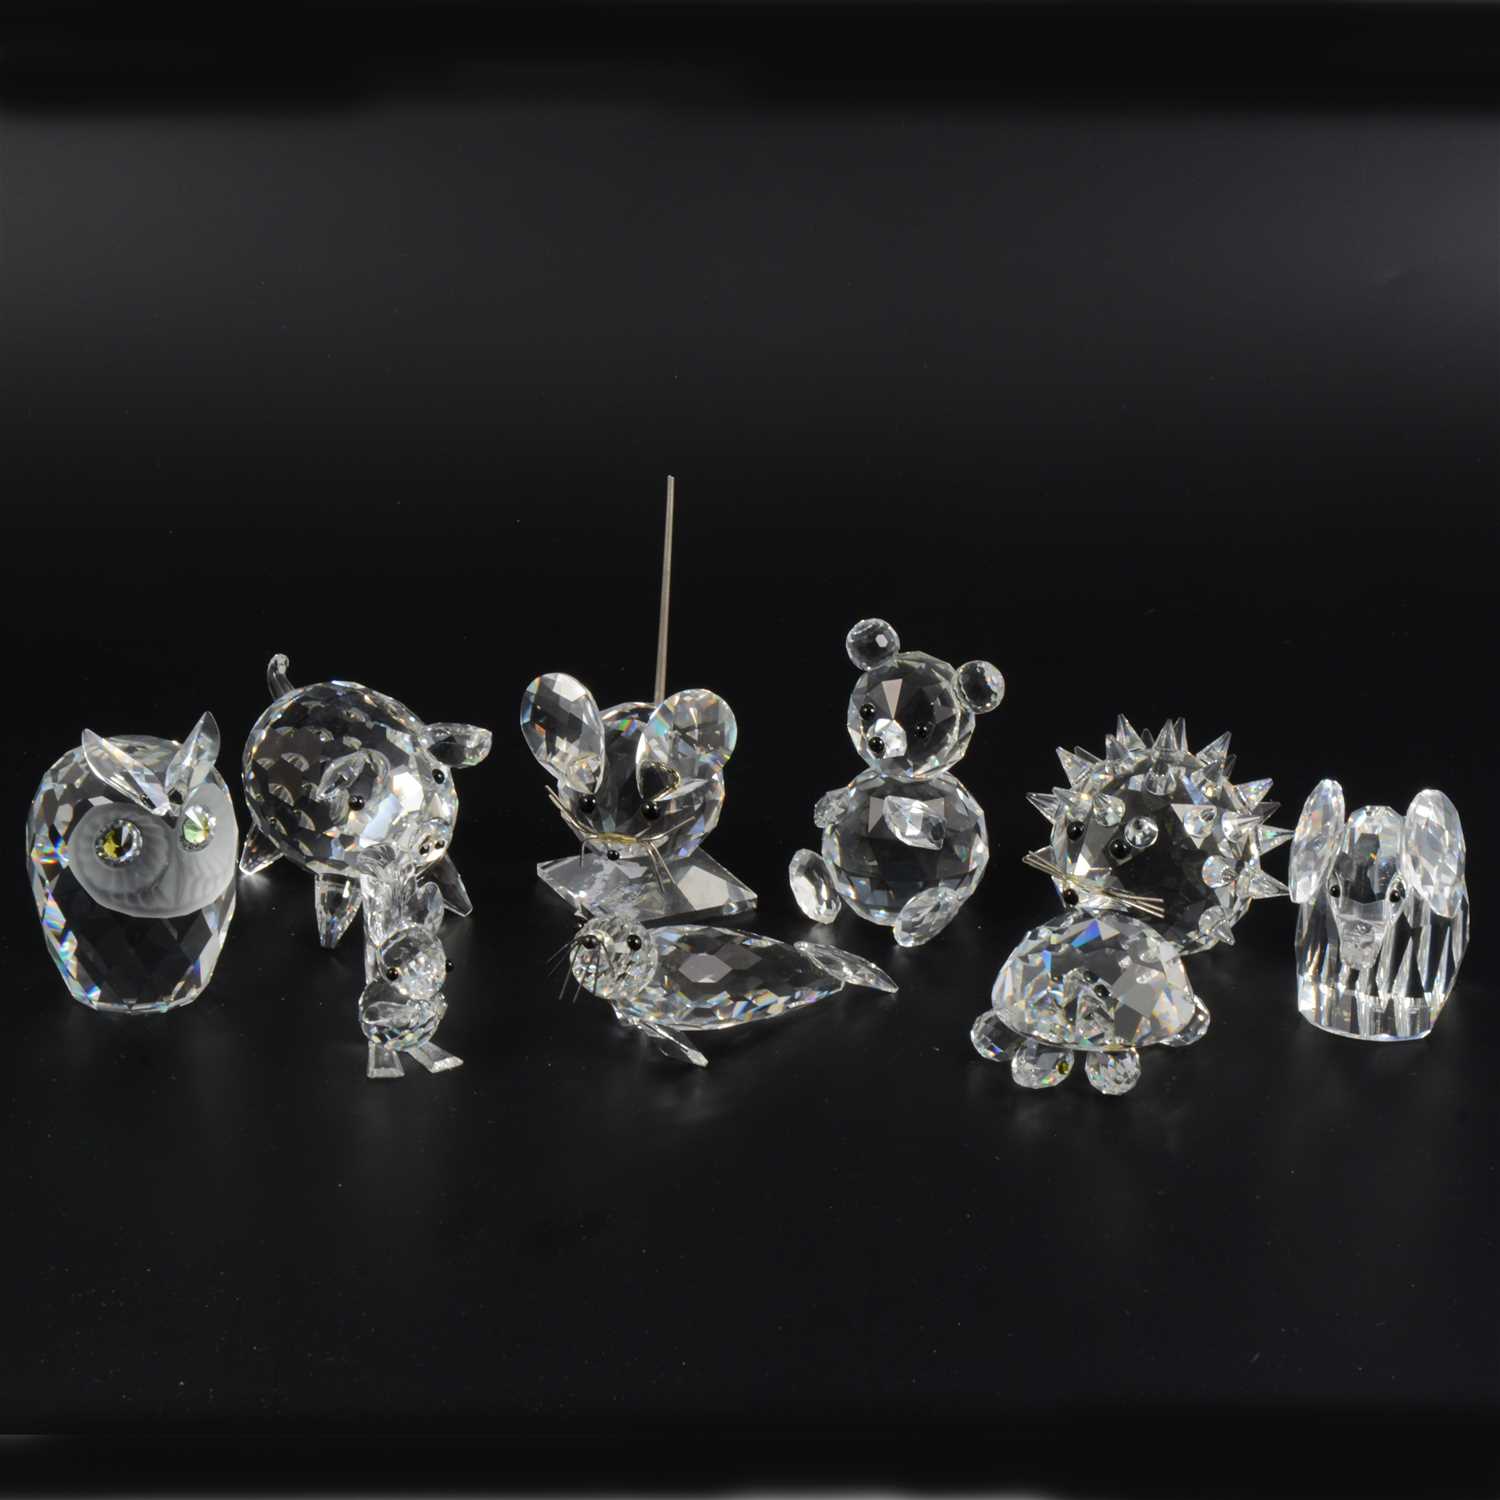 Lot 15 - Collection of Swarovski Crystal glass figures,